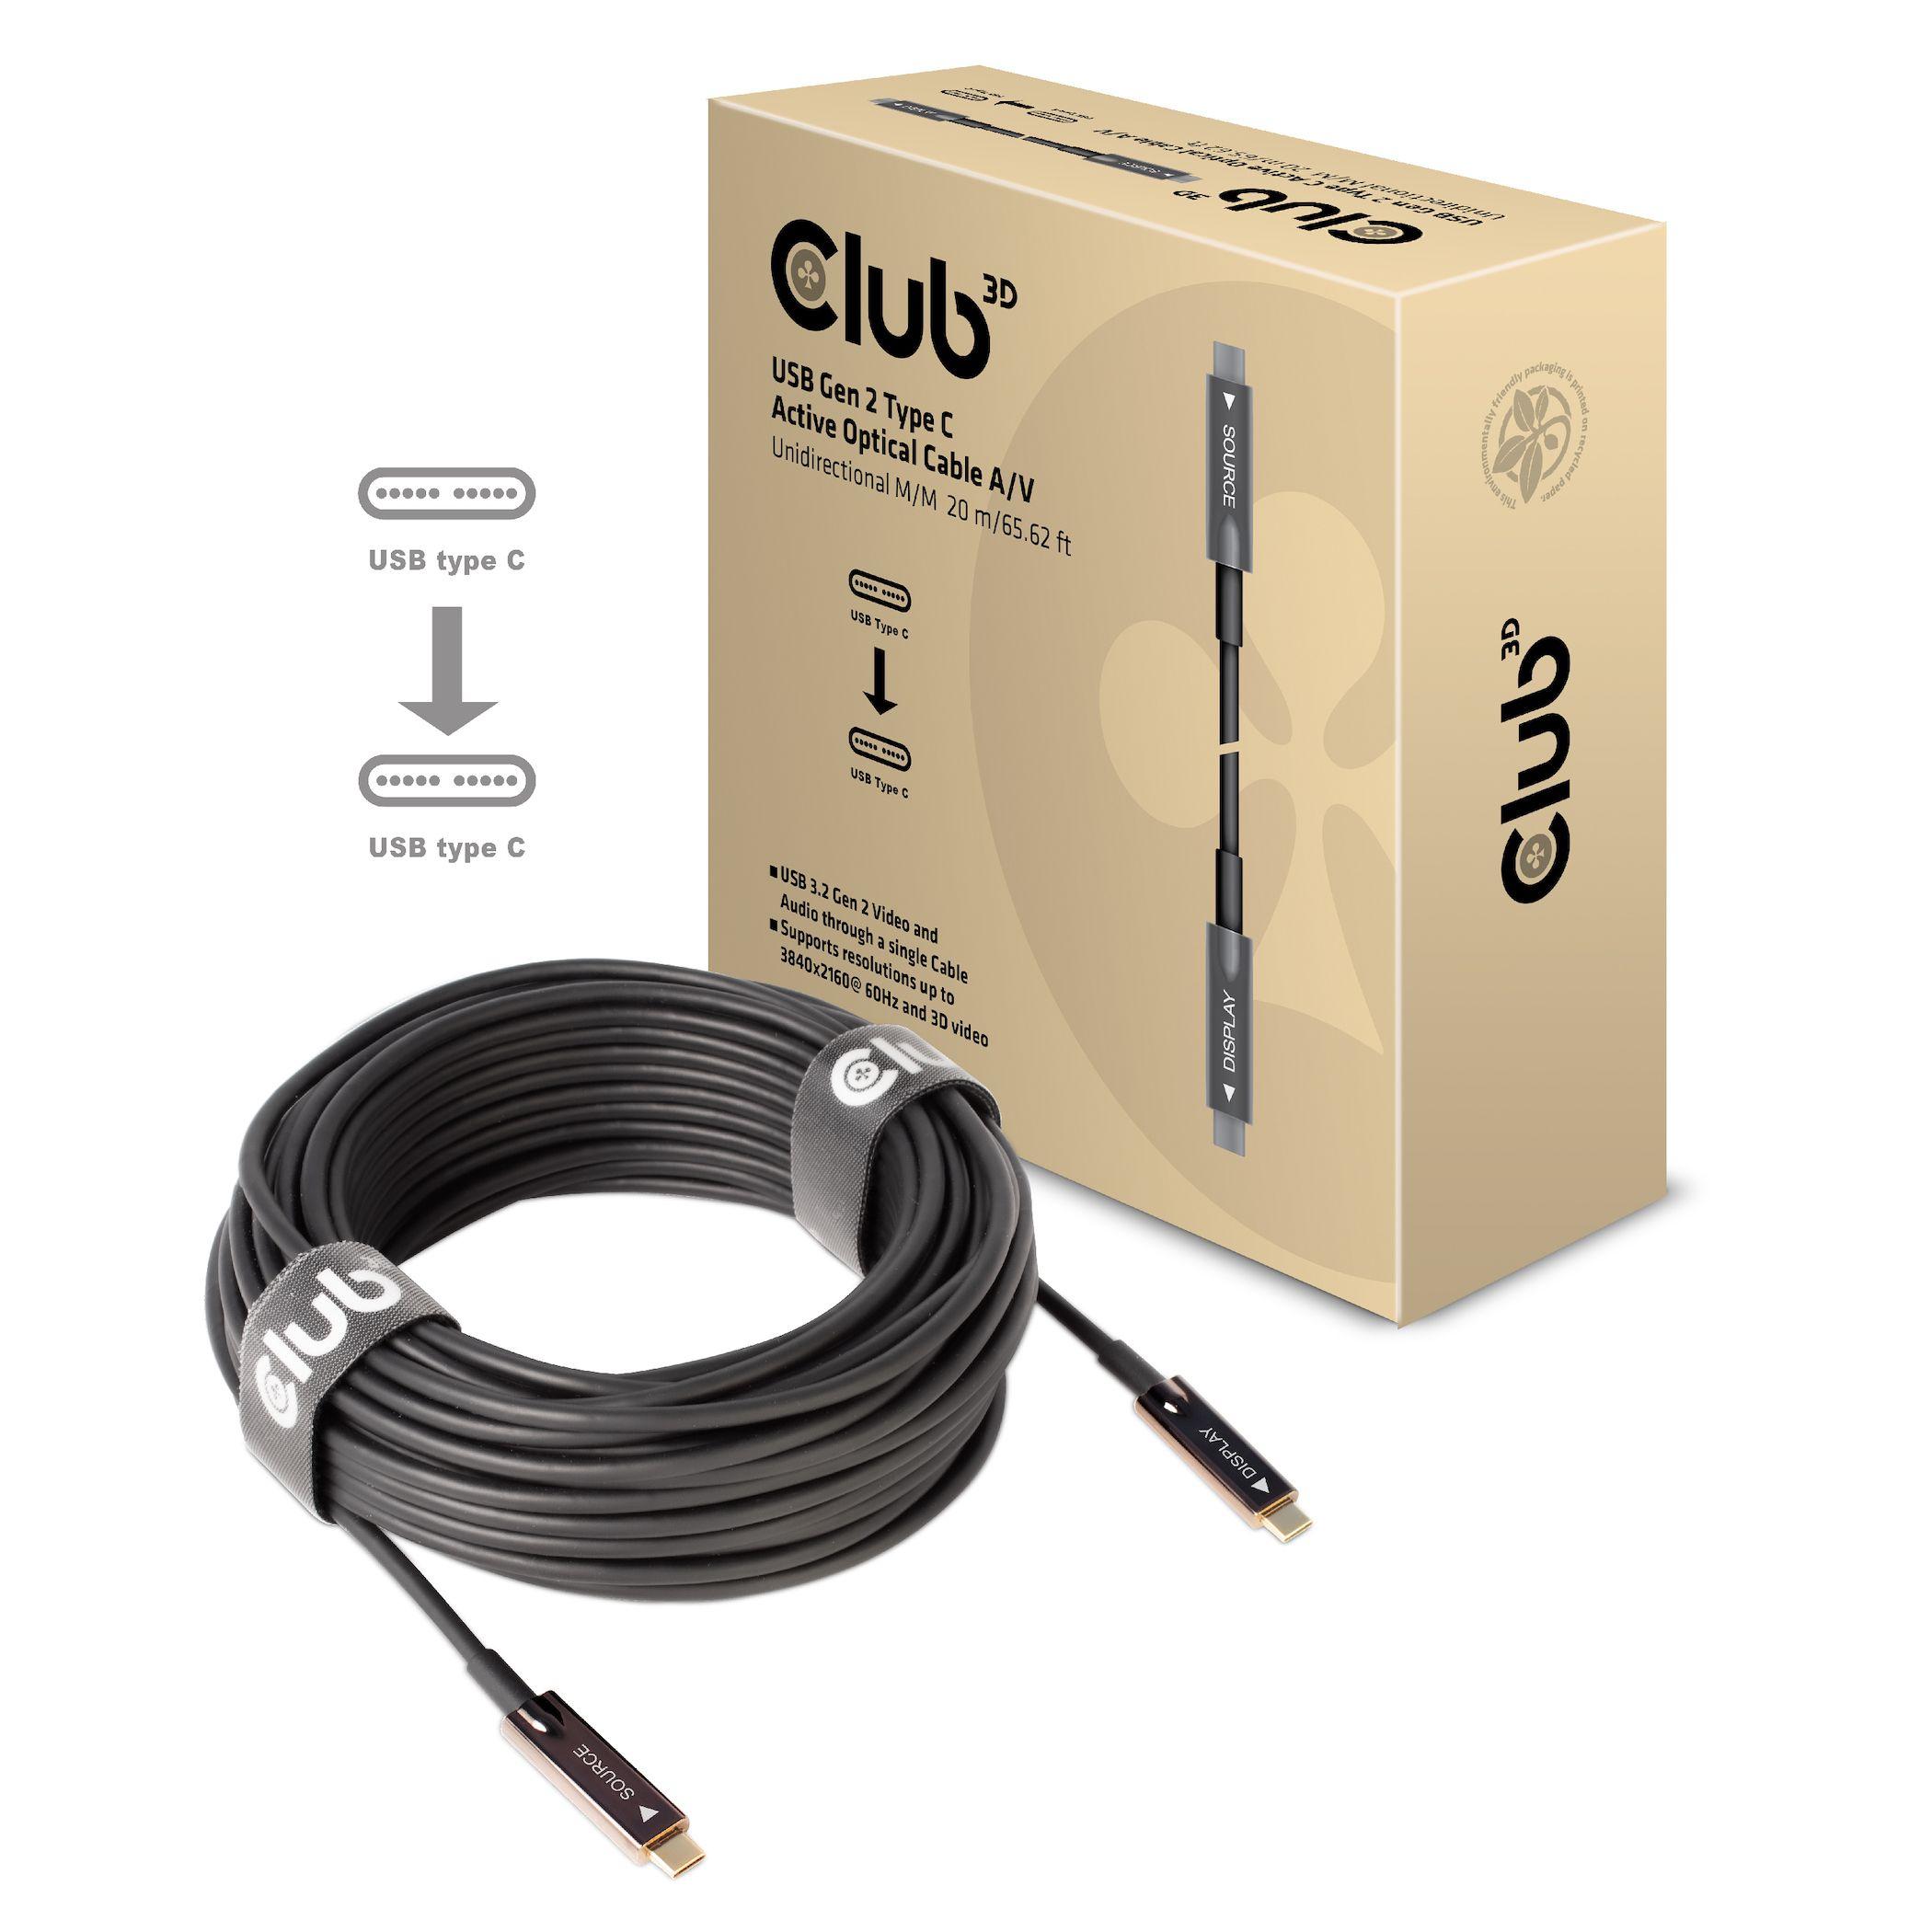 CLUB3D USB Gen 2 Type C Active Optical Cable A/V Unidirectional M/M 20 m/ 65.62 ft